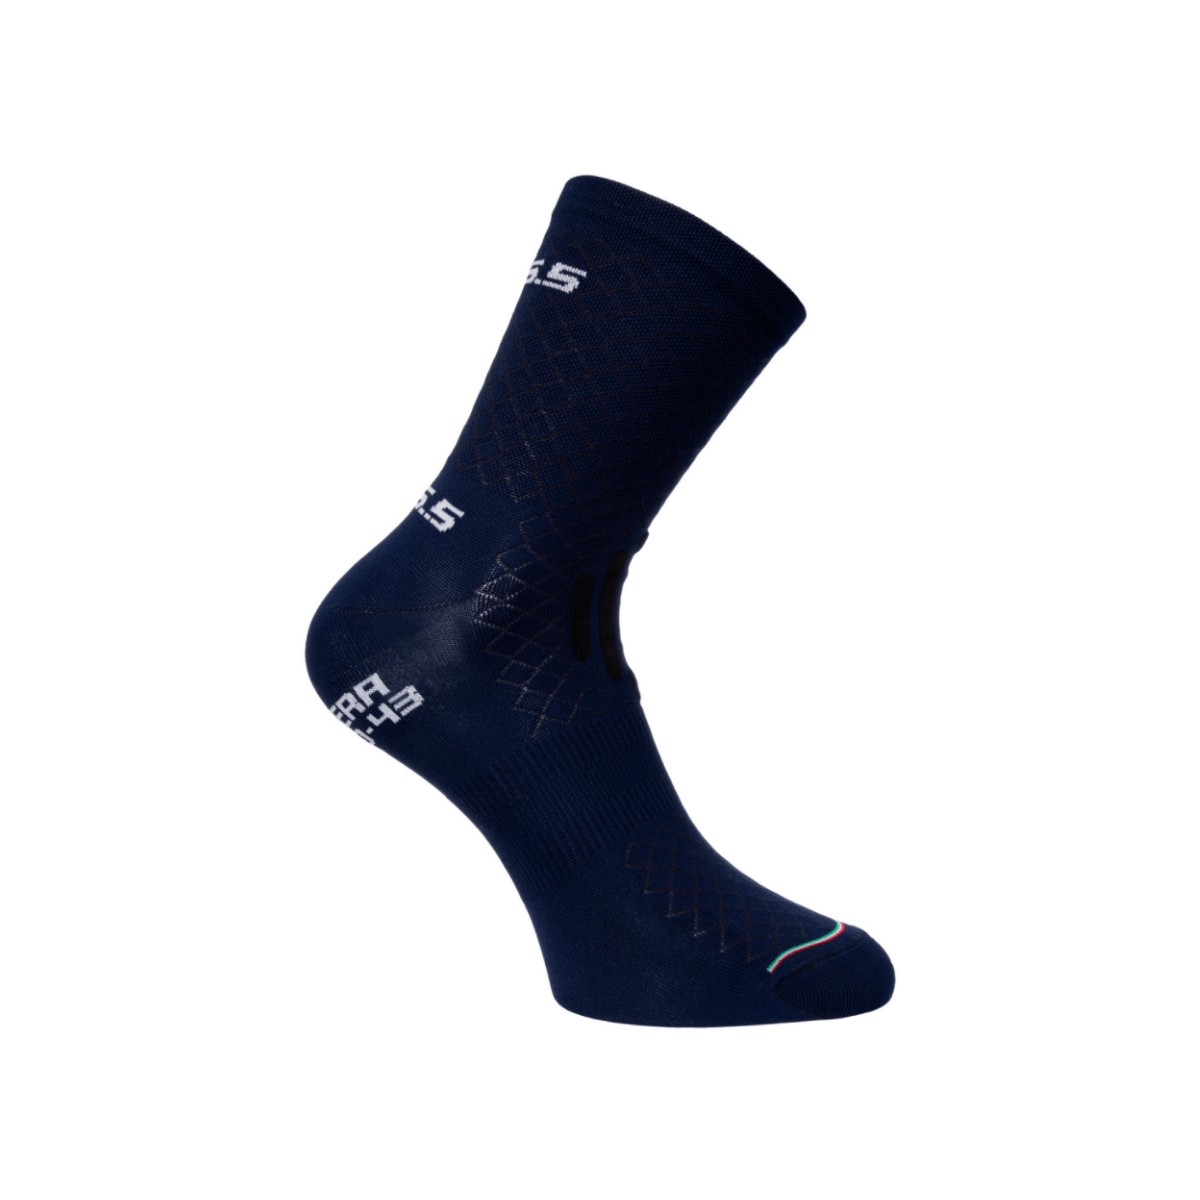 Q36.5 Leggera Socks azul marinho, Tamanho 44-47